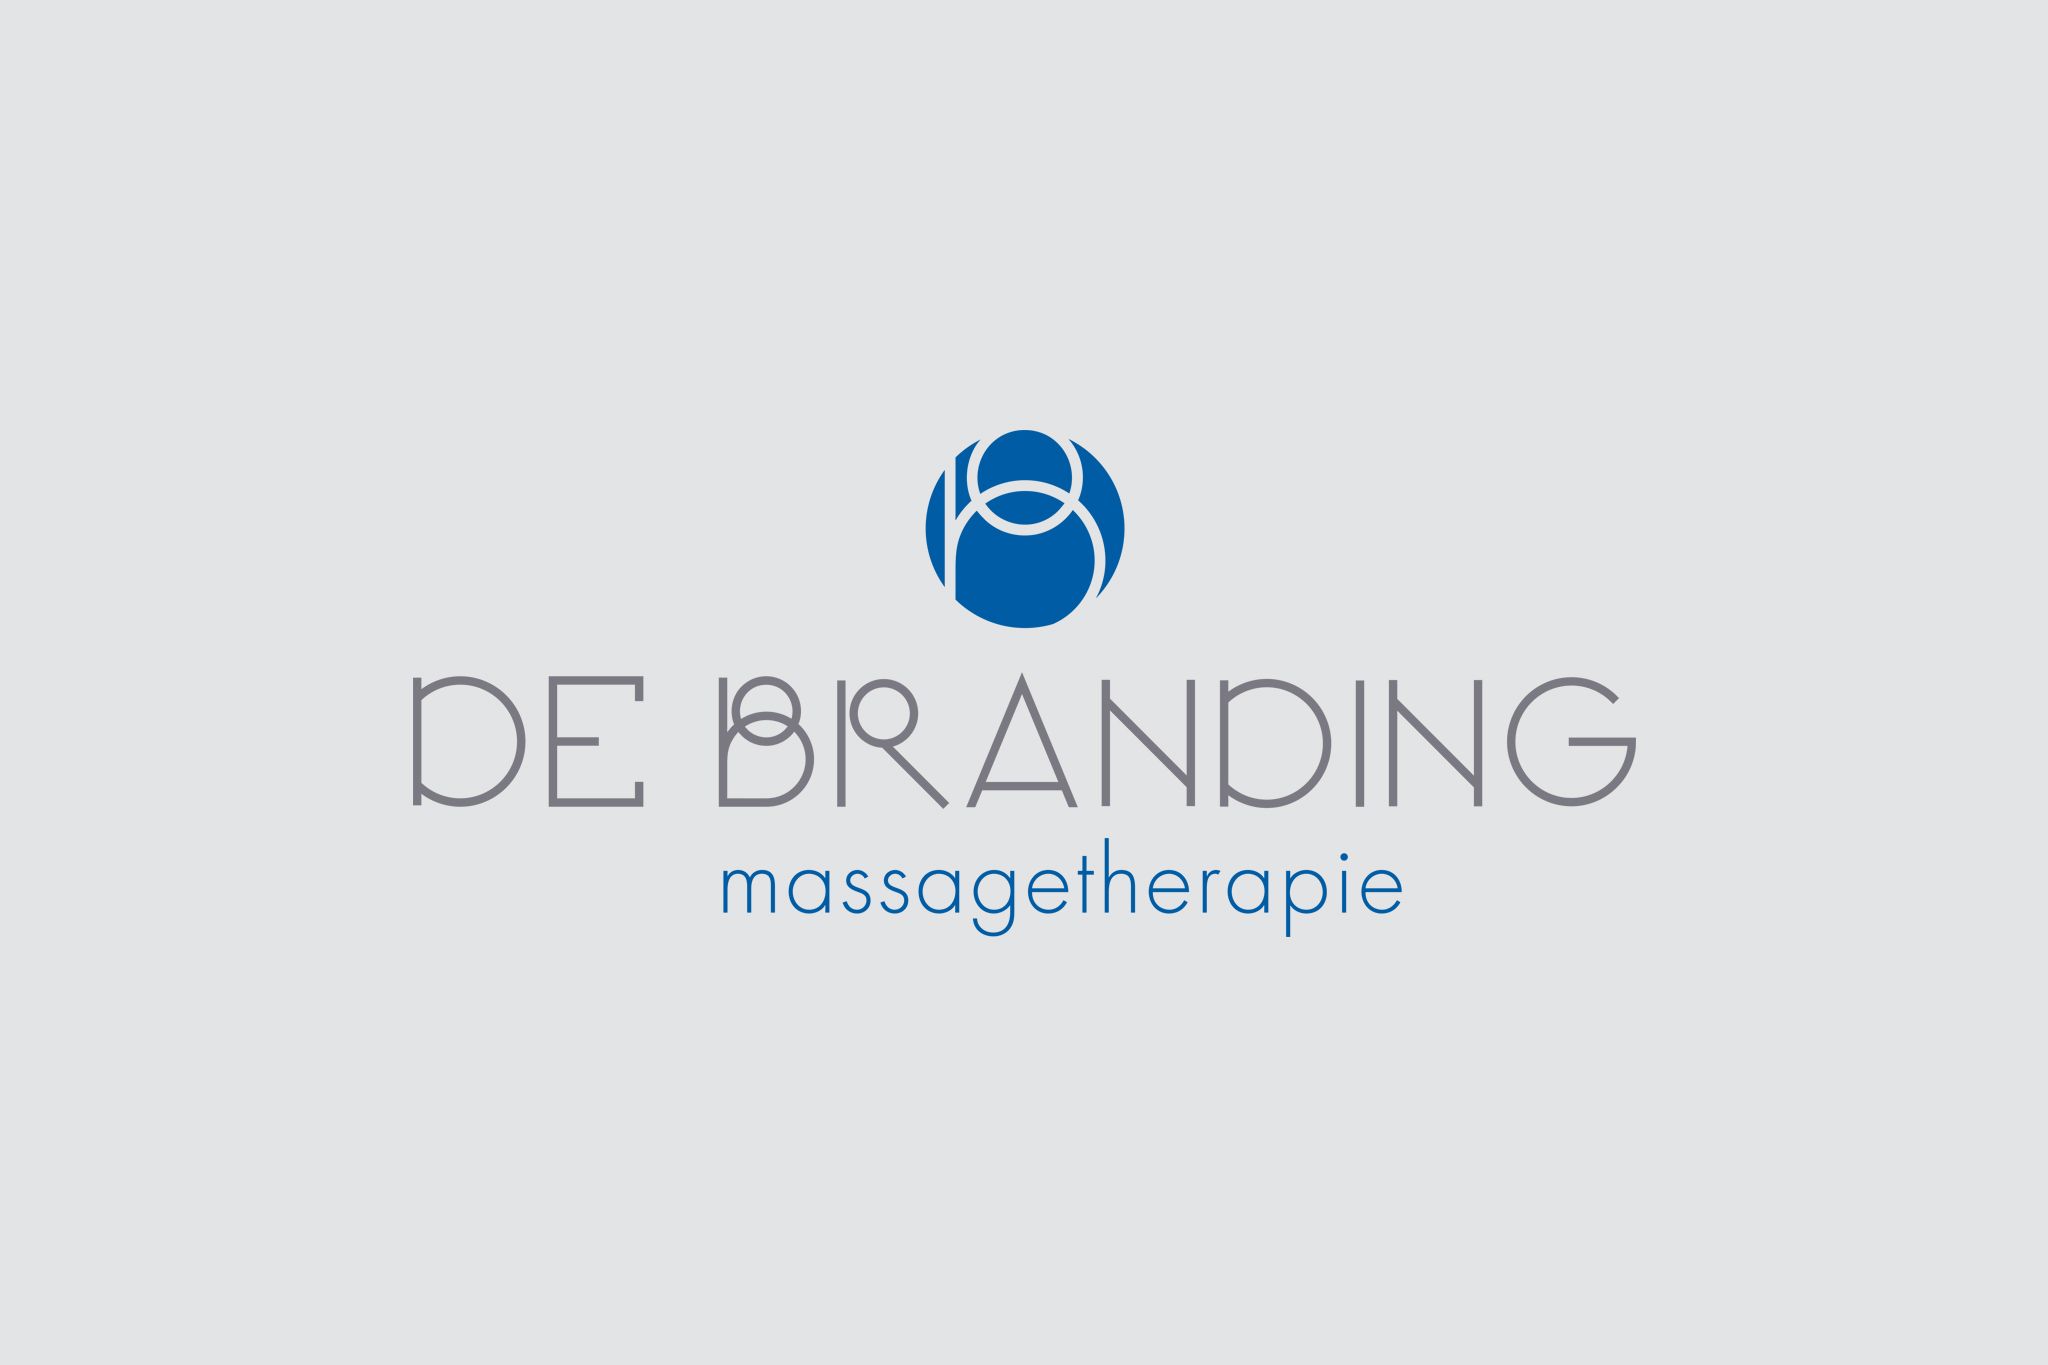 De Branding massagetherapie